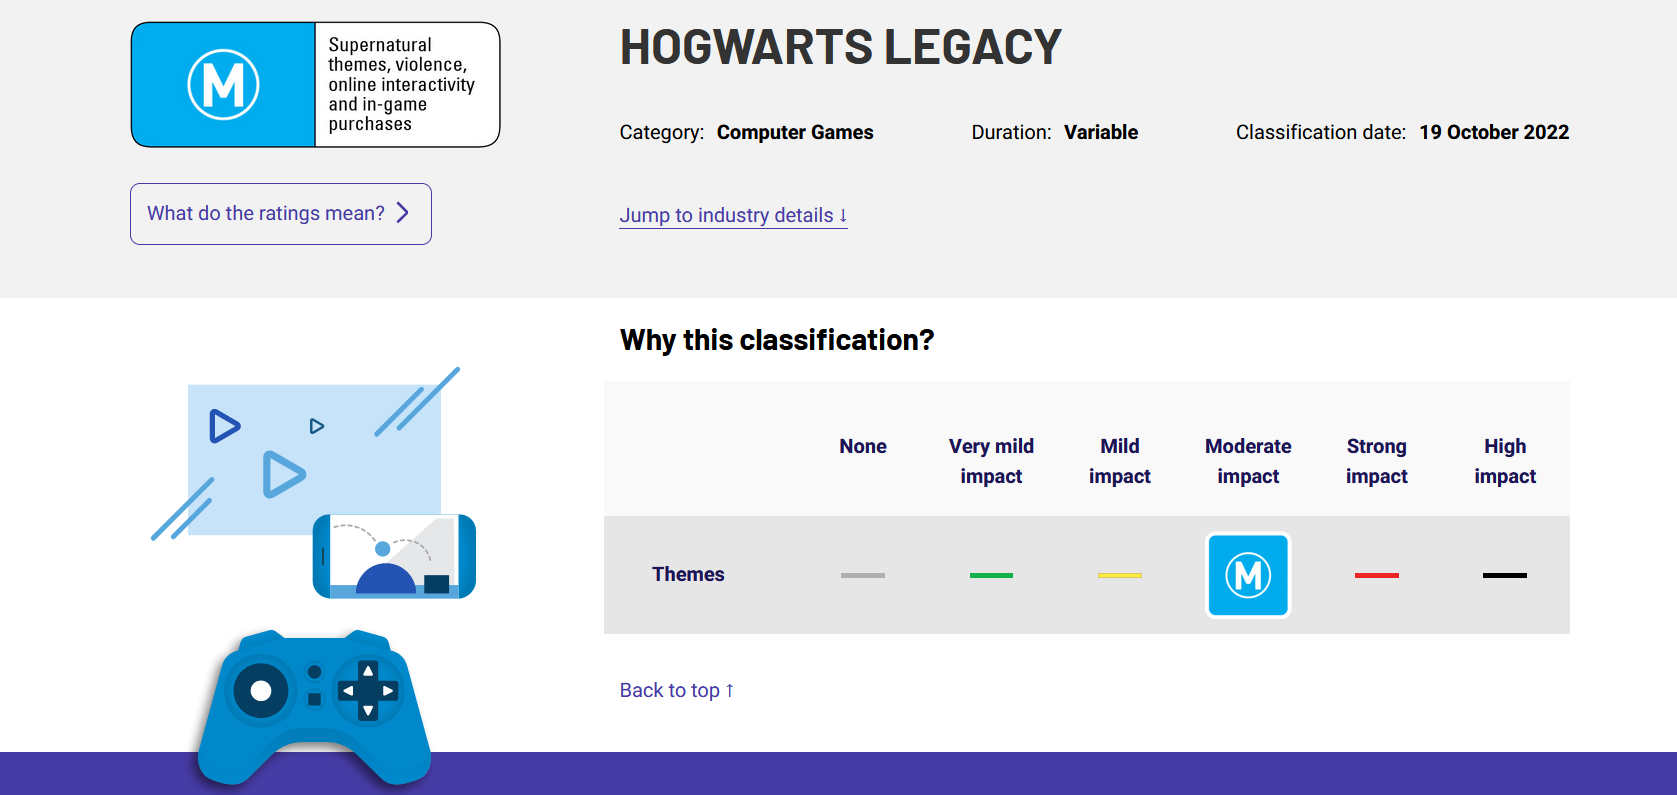 Hogwarts legacy rated